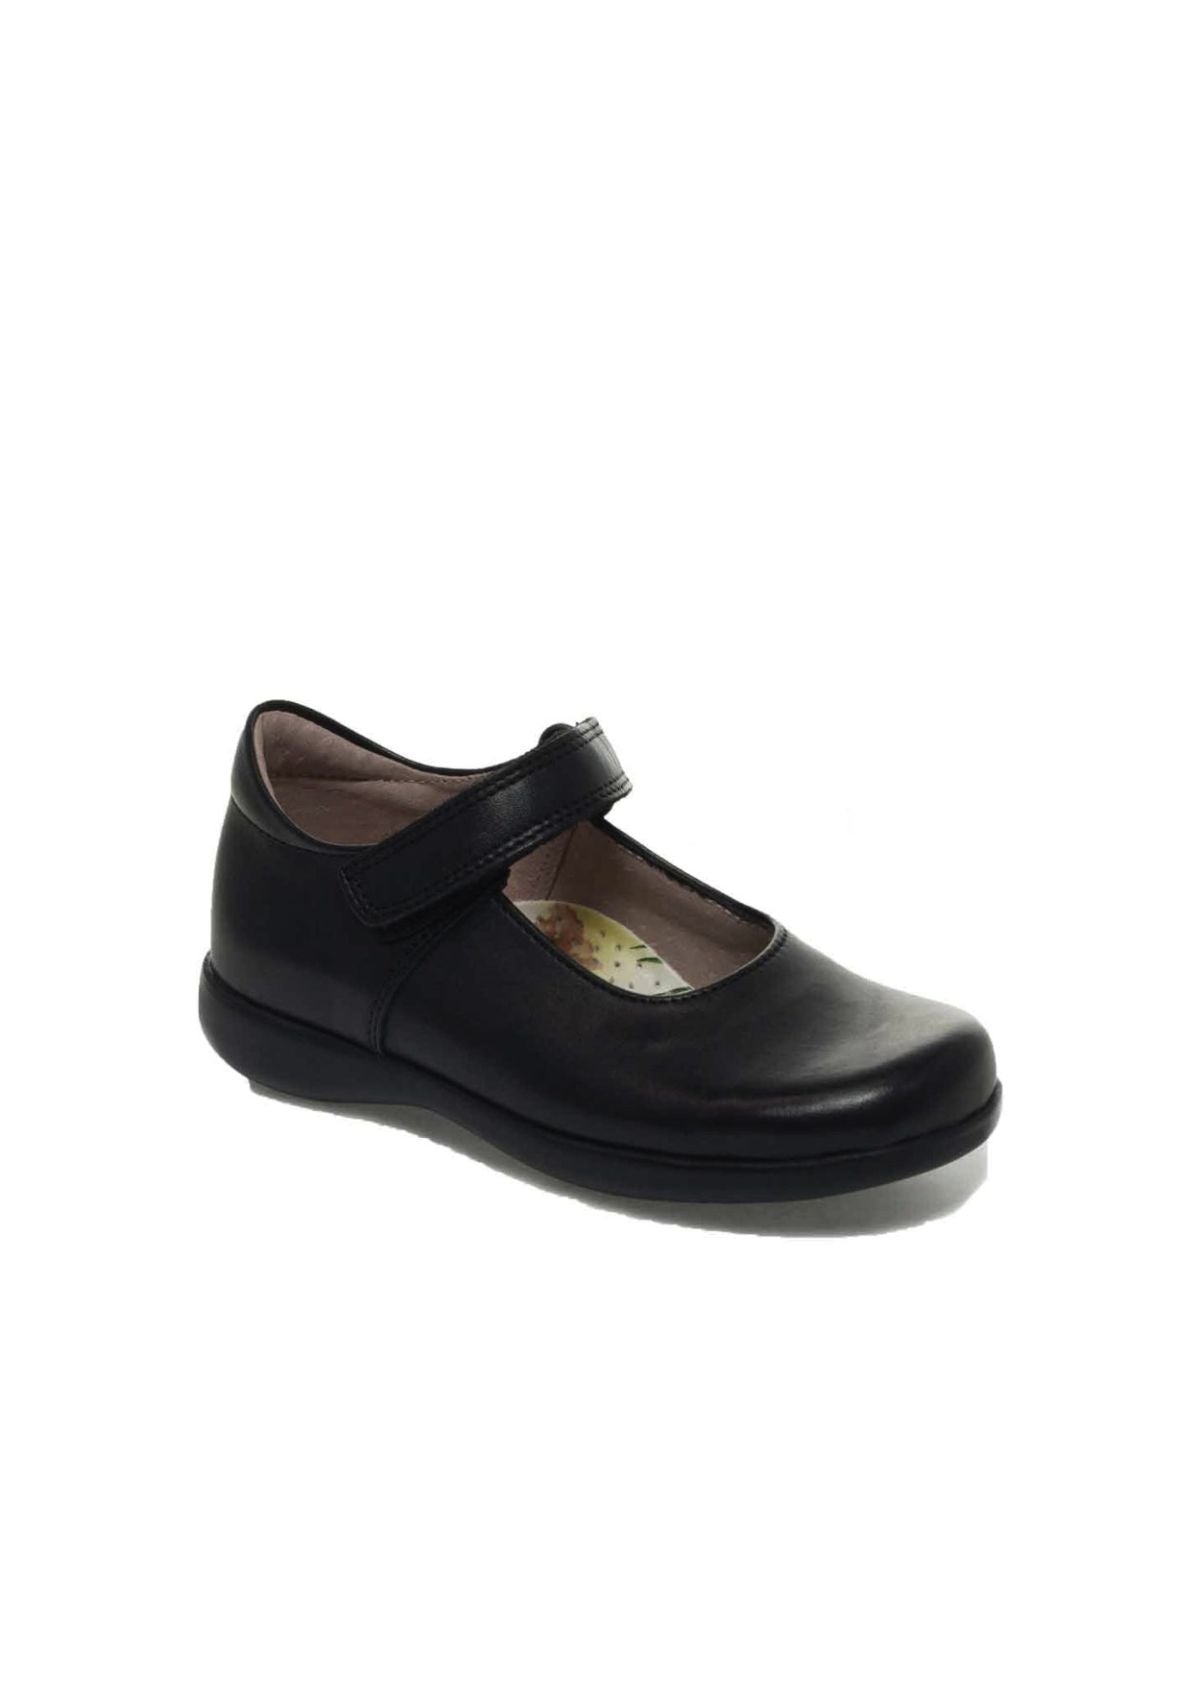 Petasil Girls School Shoes Bea Black Patent